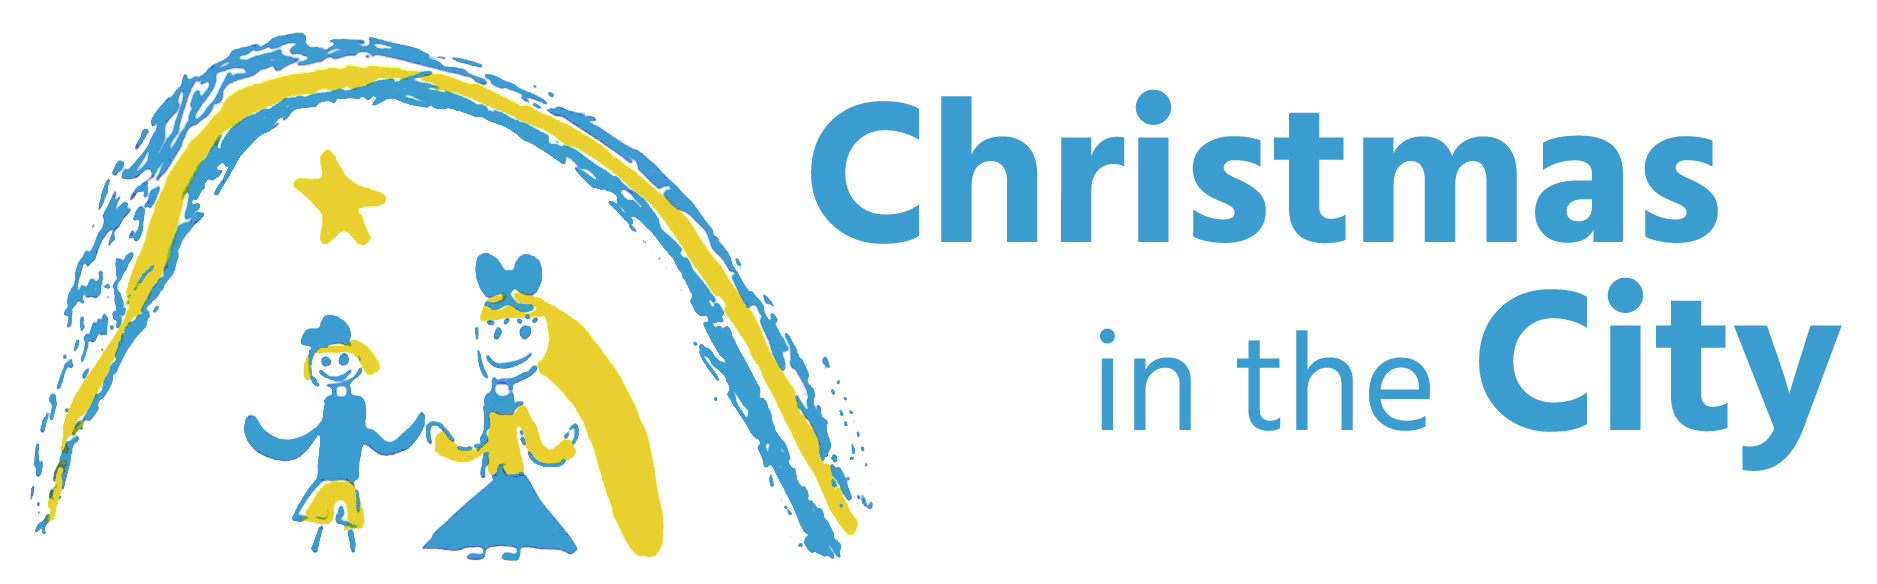 Christmas List Logo - Christmas in the City – A non-profit organization bringing Christmas ...